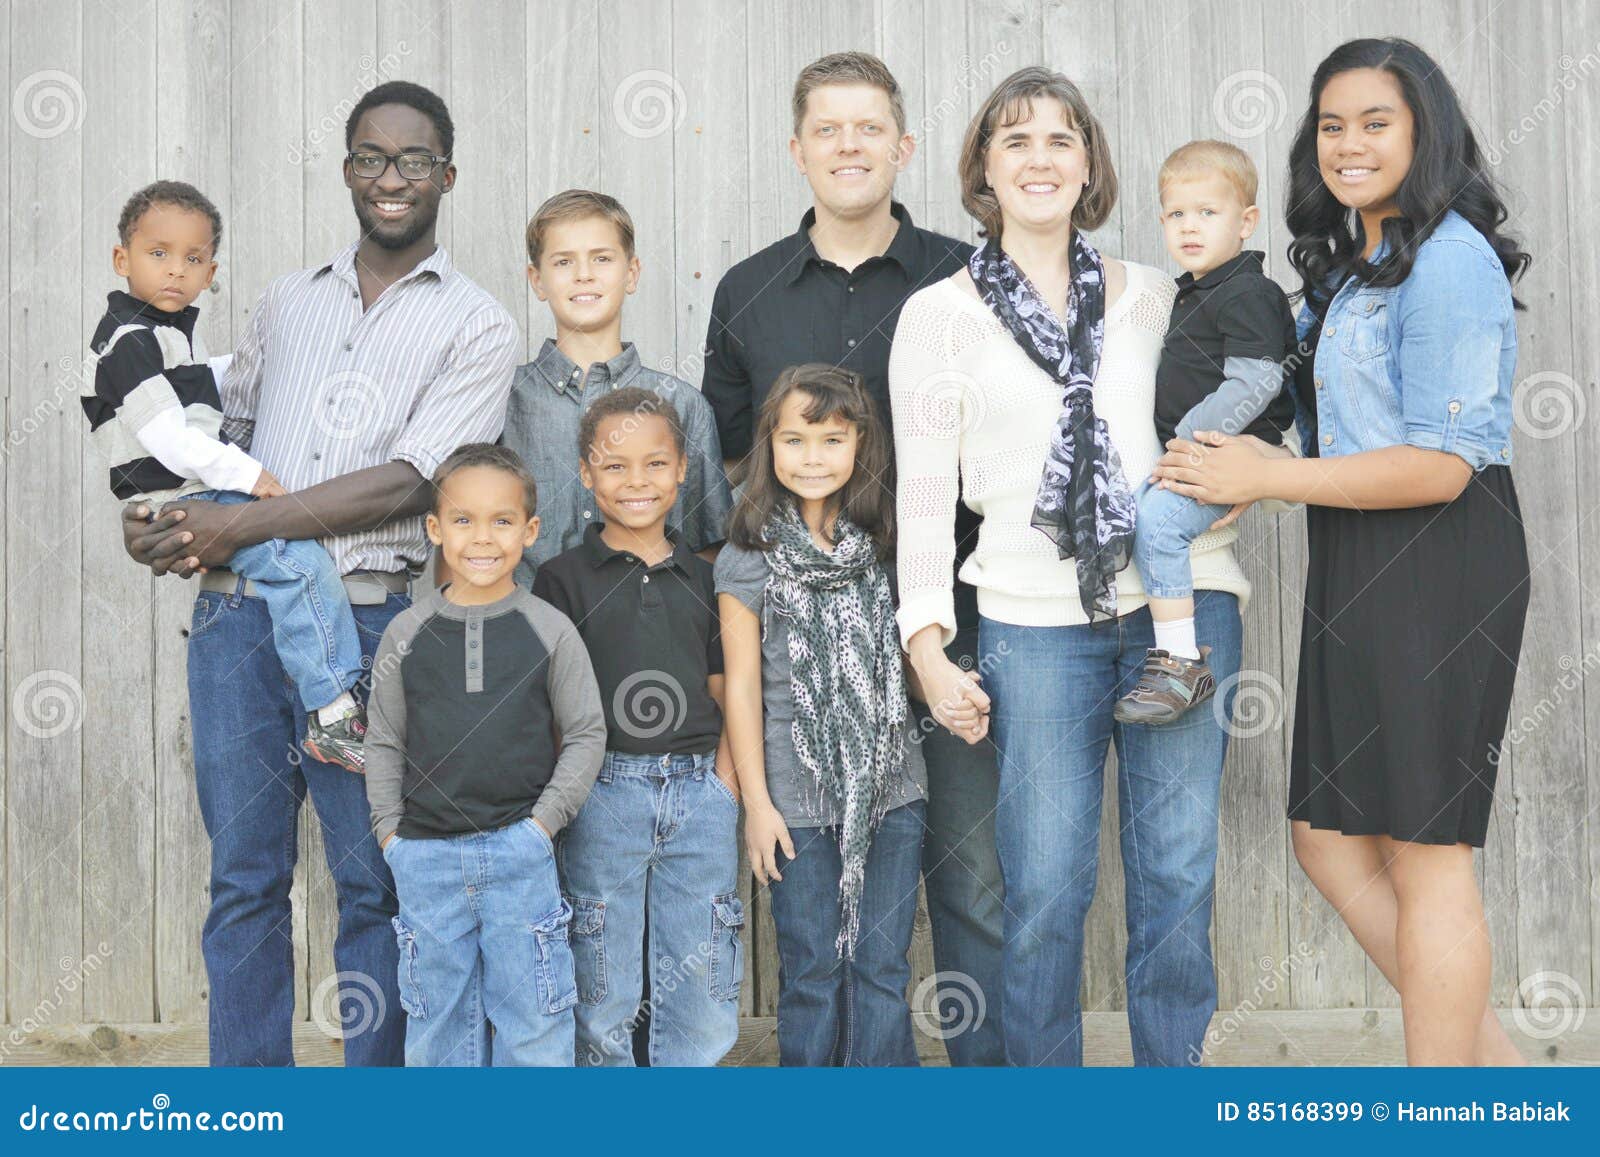 large multi racial family